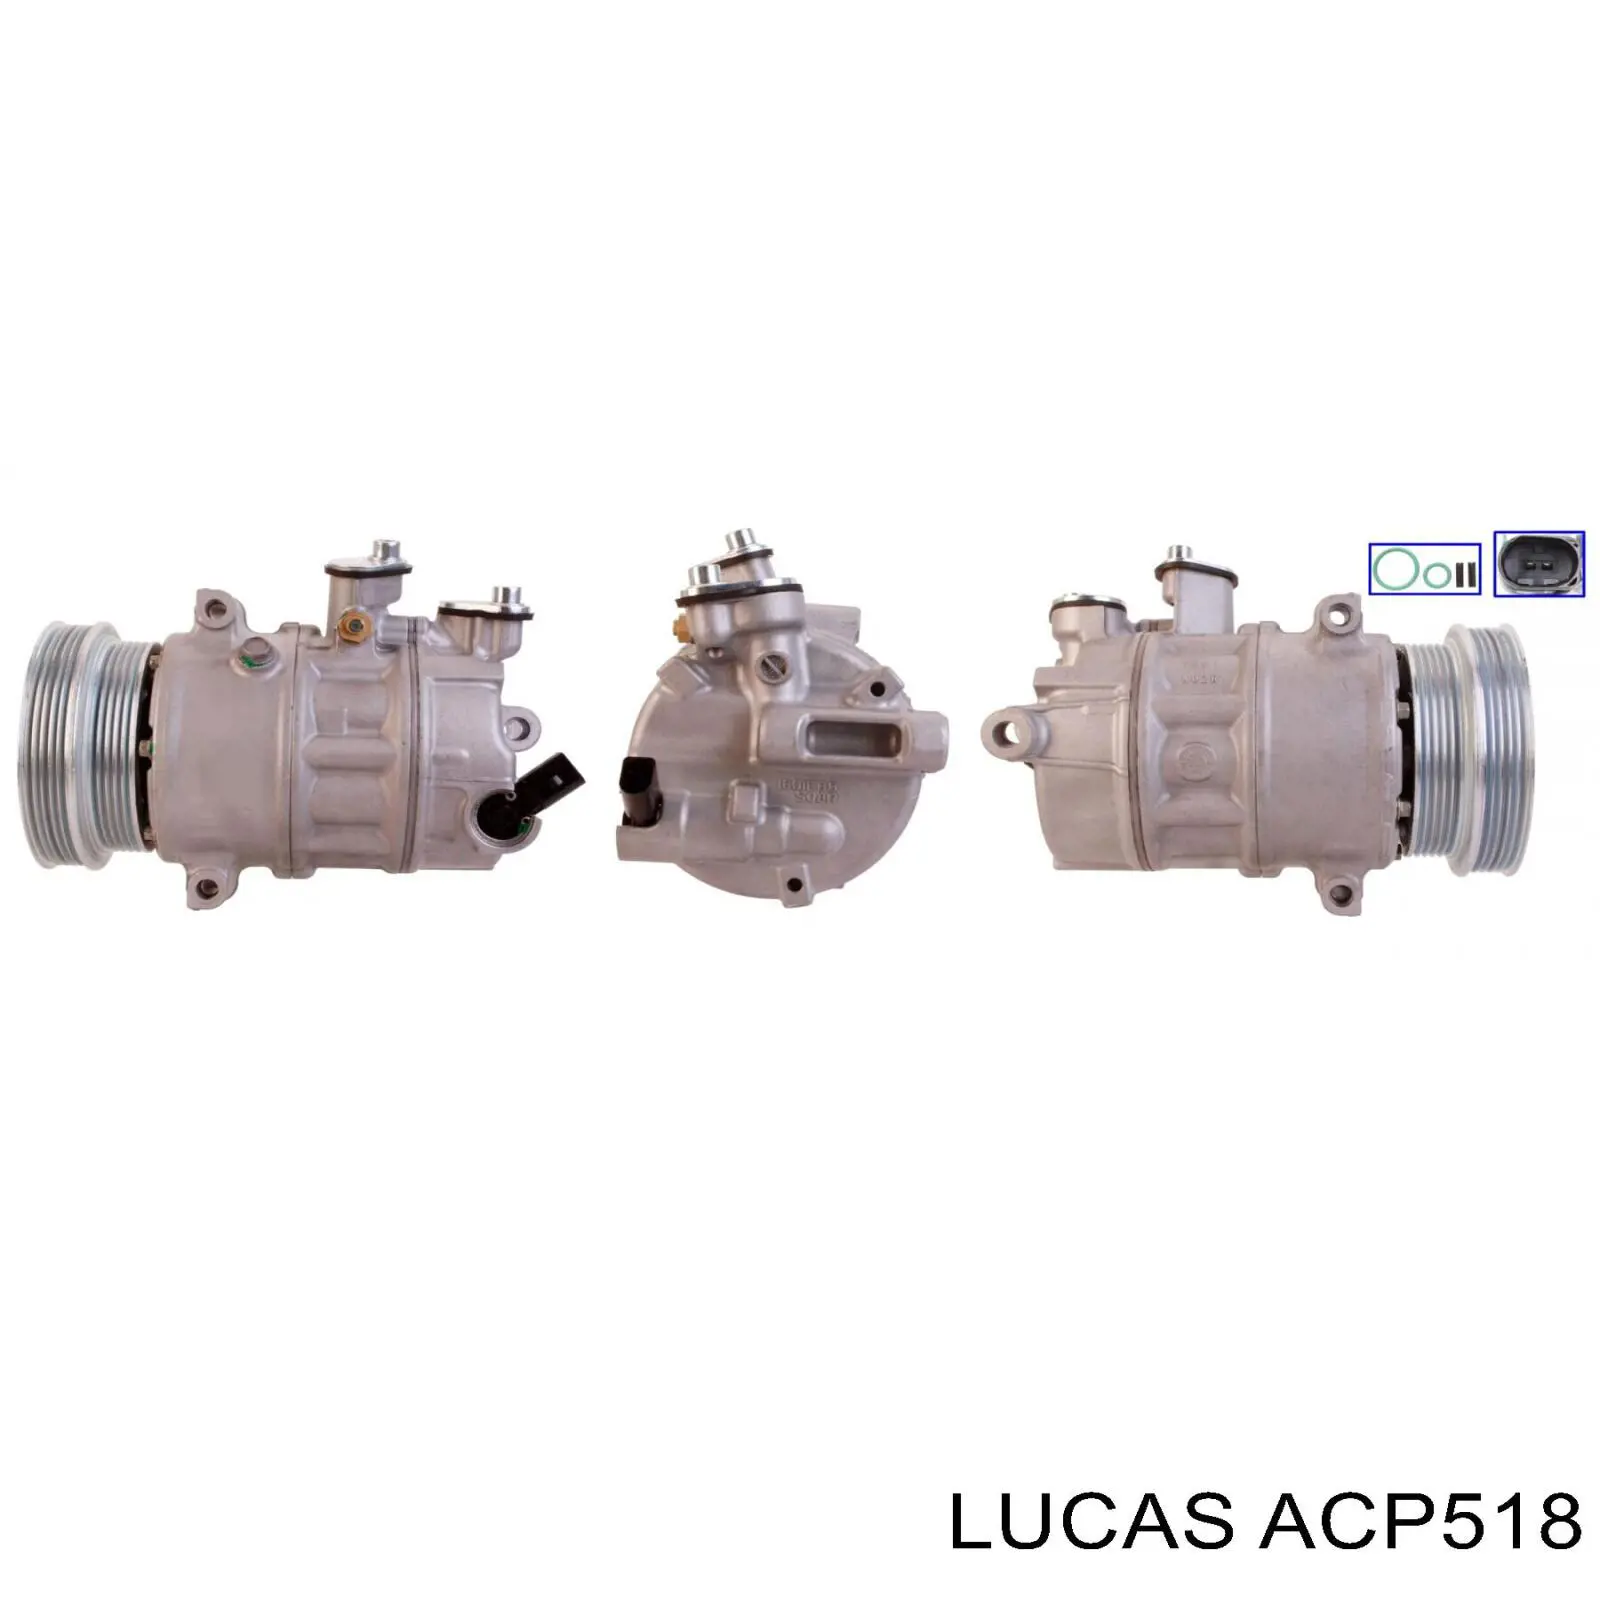 Compresor de aire acondicionado ACP518 Lucas